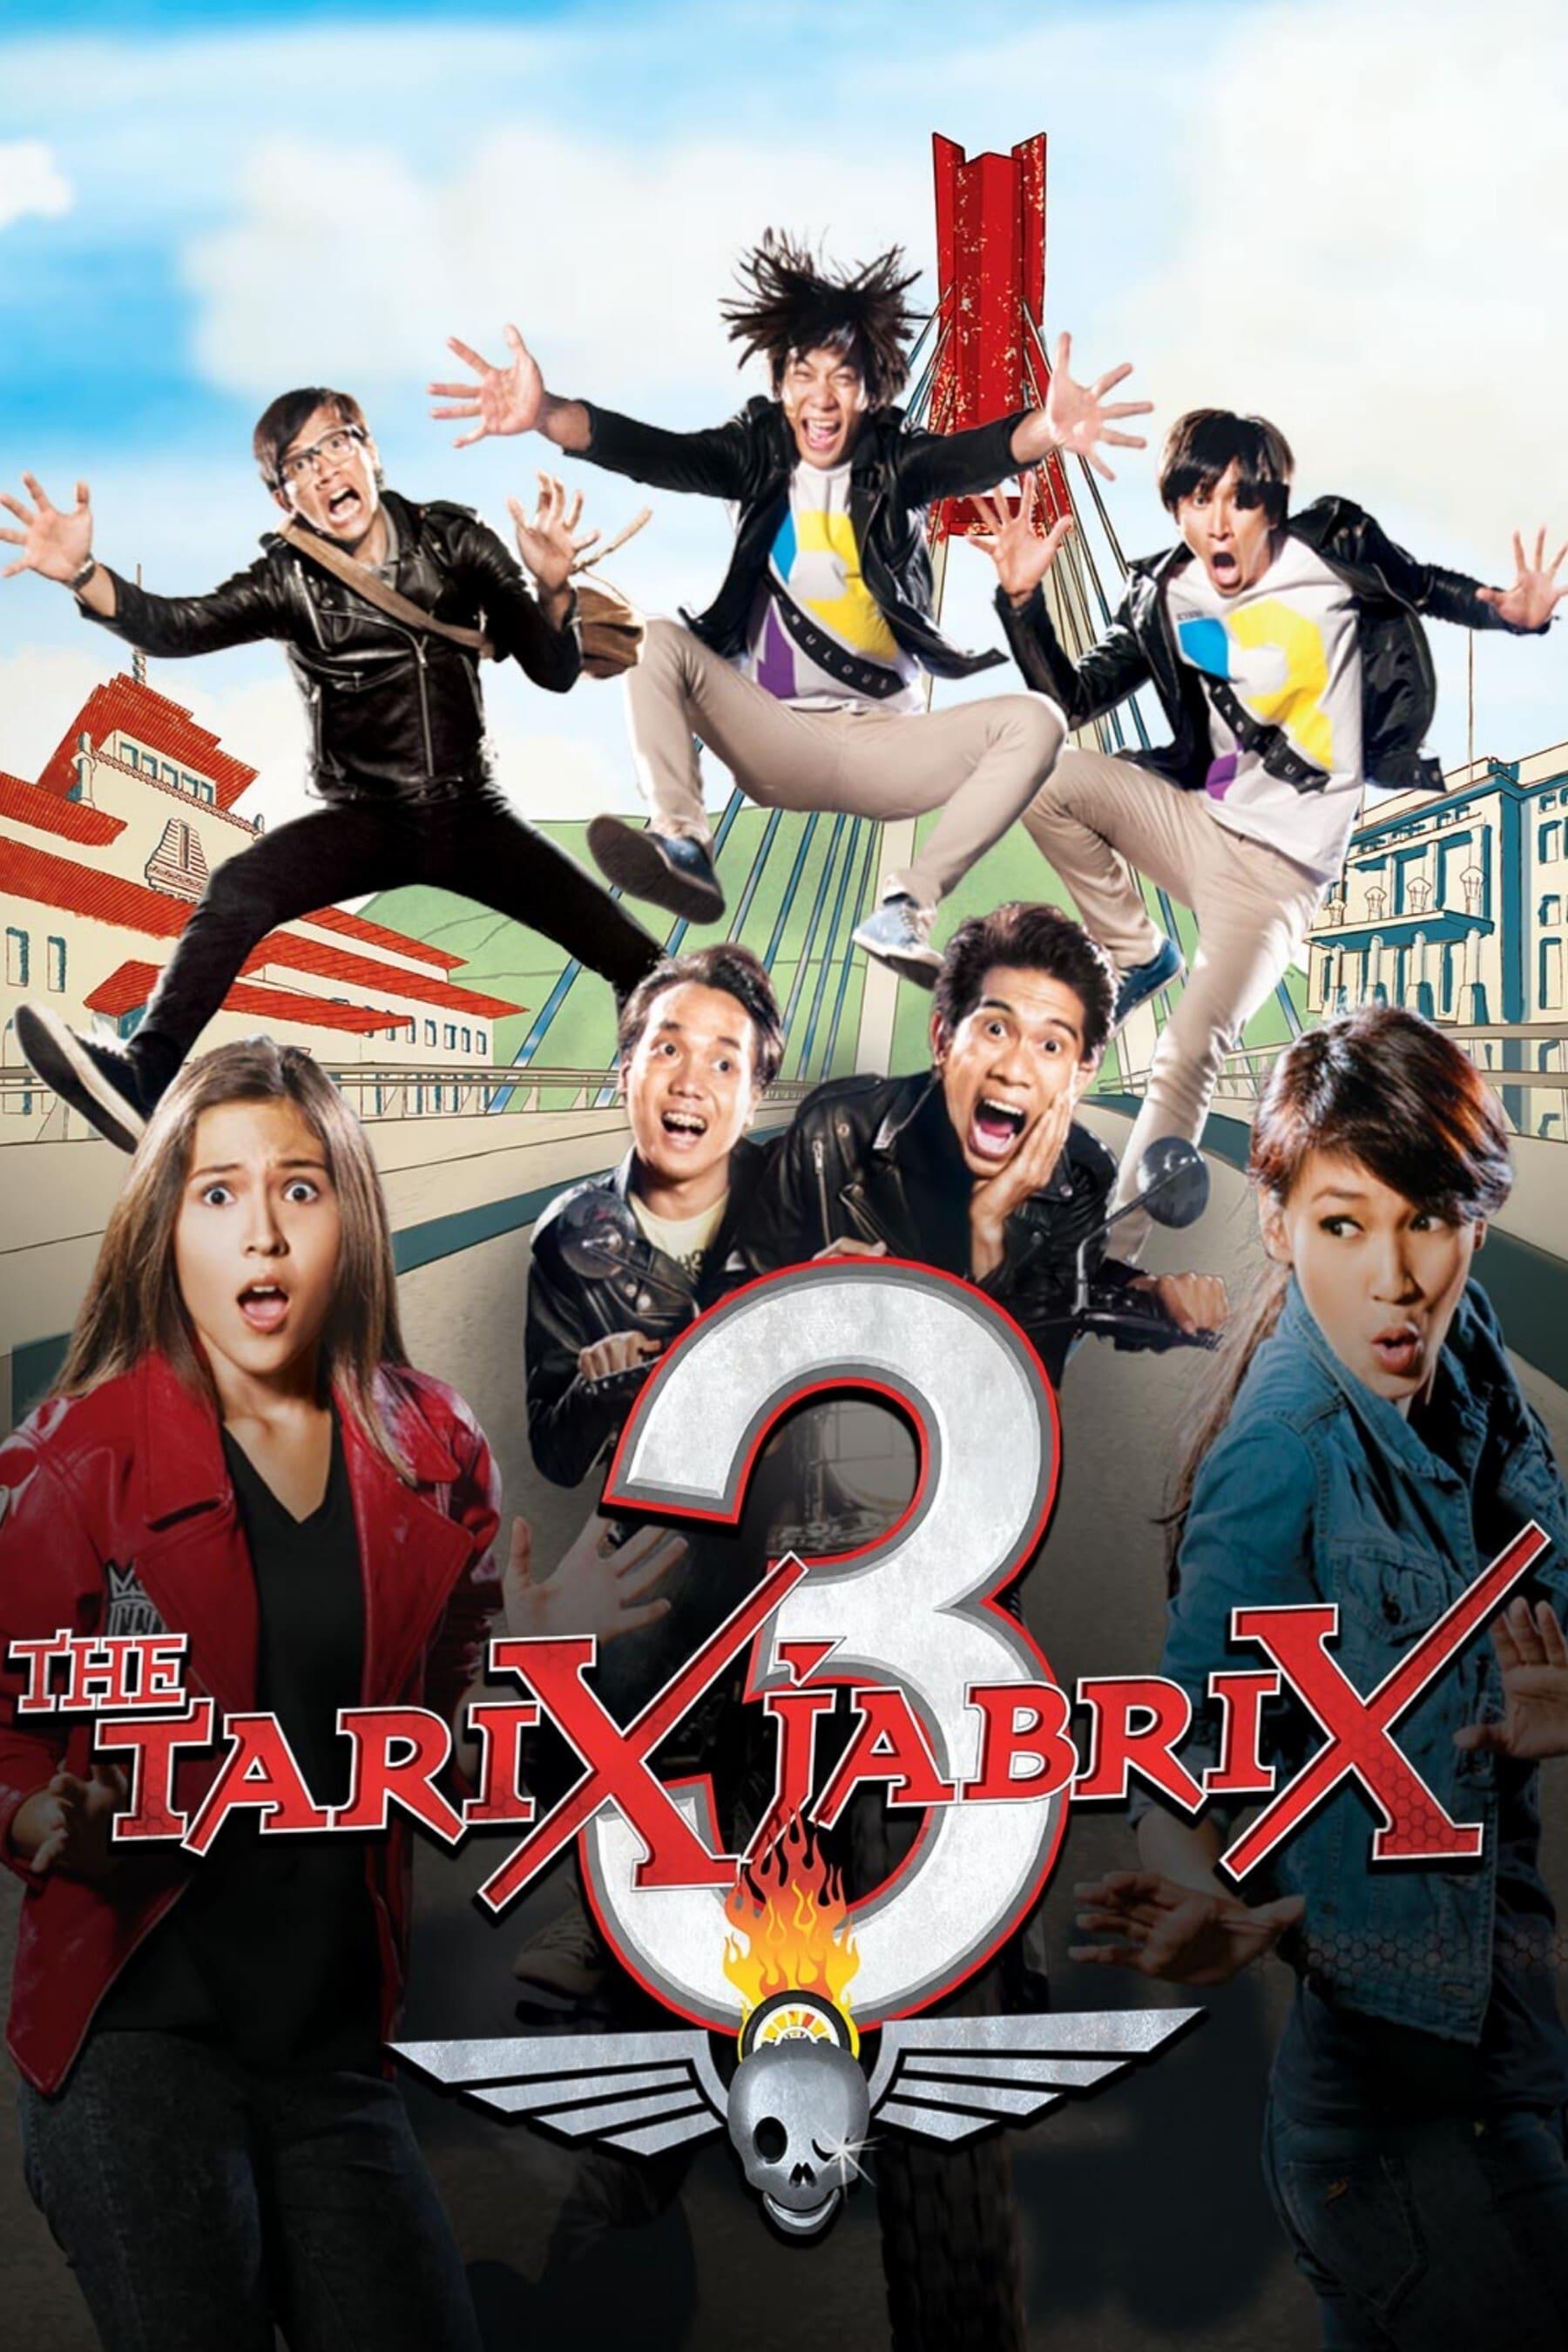 The Tarix Jabrix 3 poster